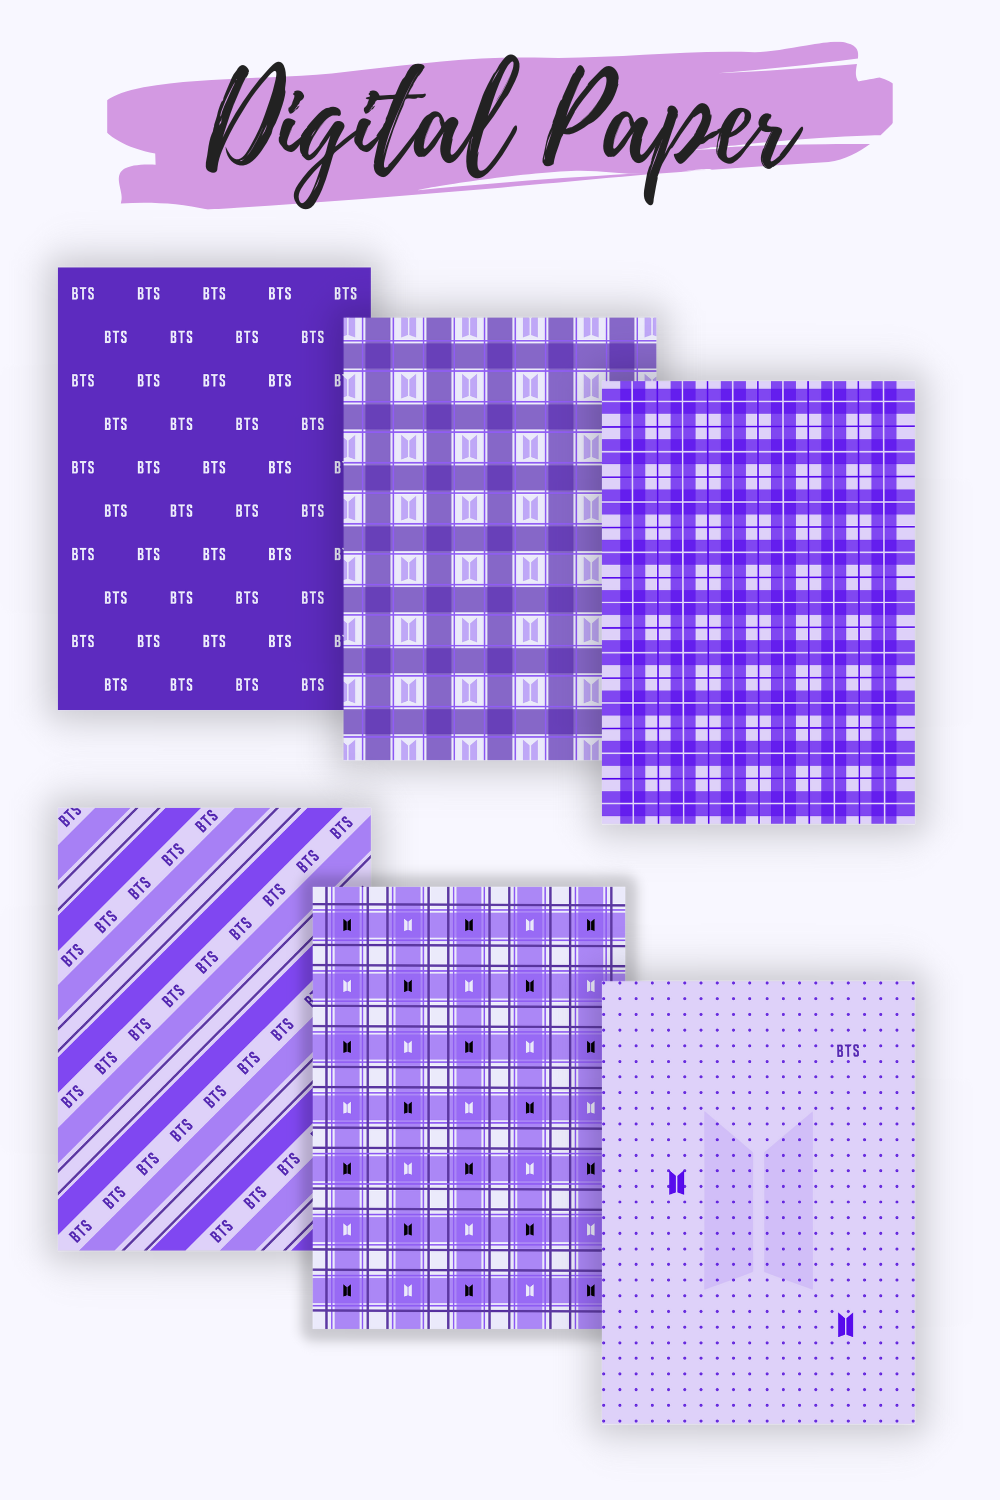 Aesthetic Purple Digital Paper - KPOP Edition - BTS Inspiration pinterest preview image.